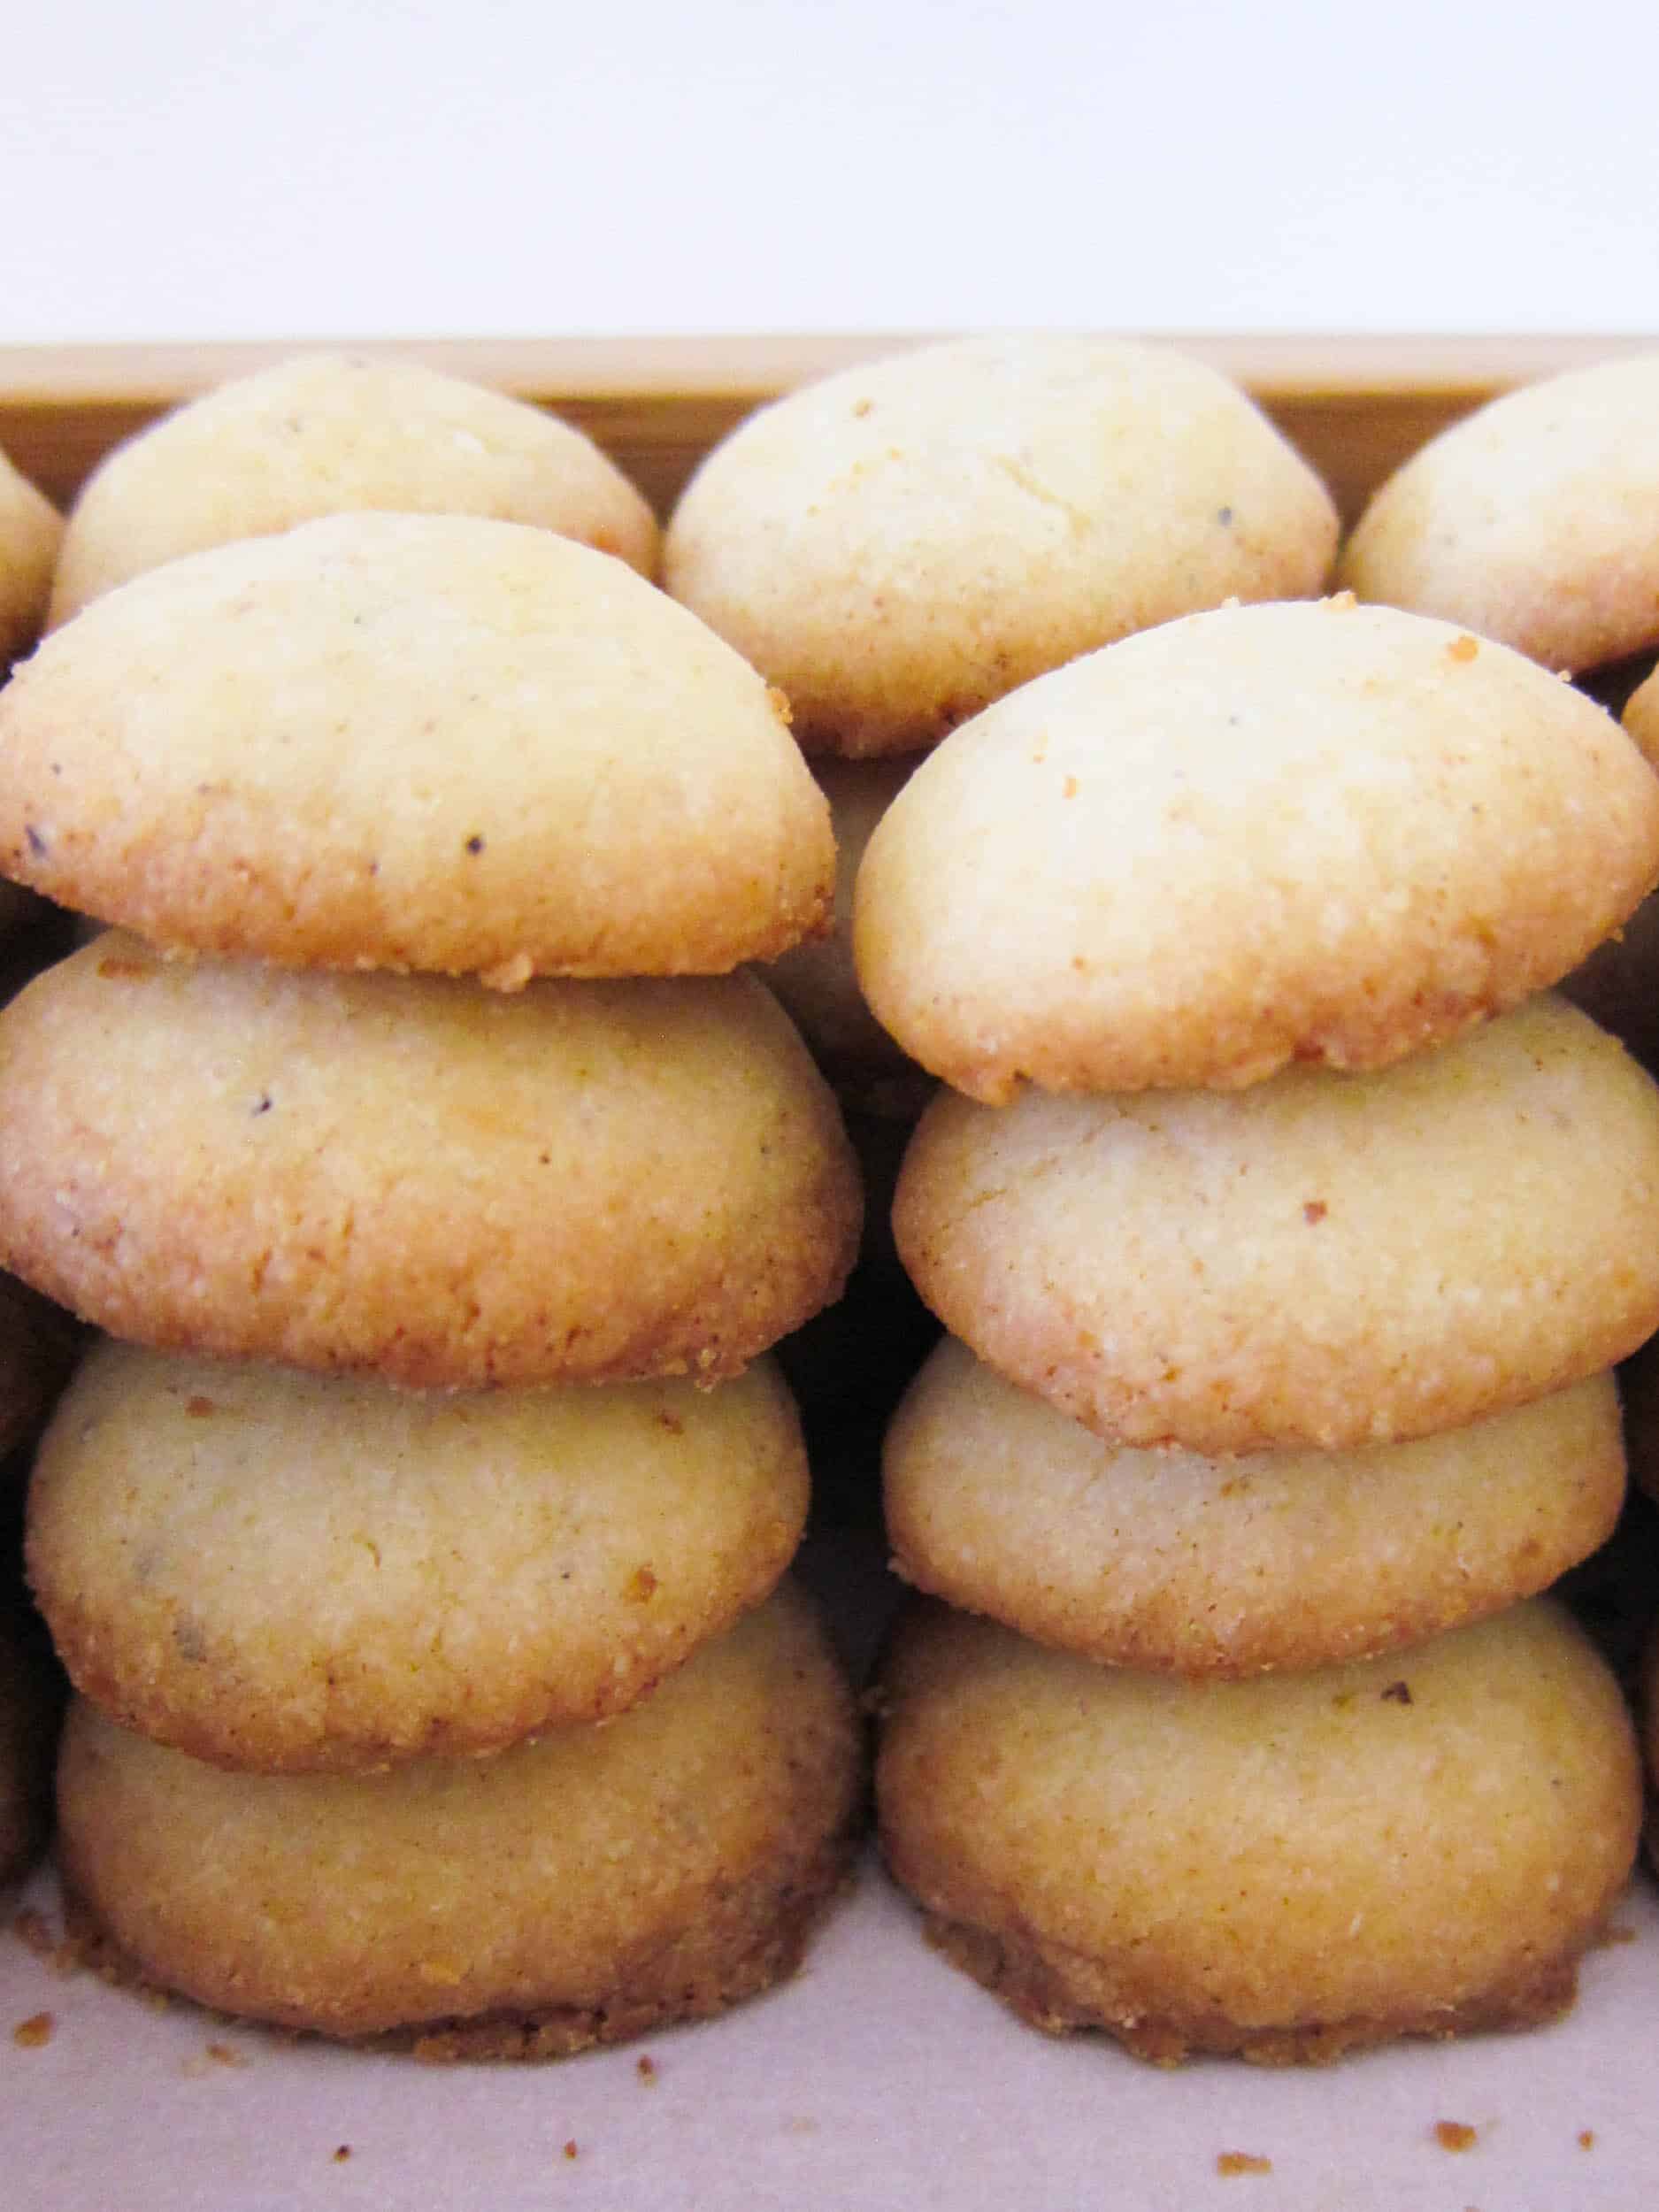 Cardamom cookies biscuits nan khatai stacked